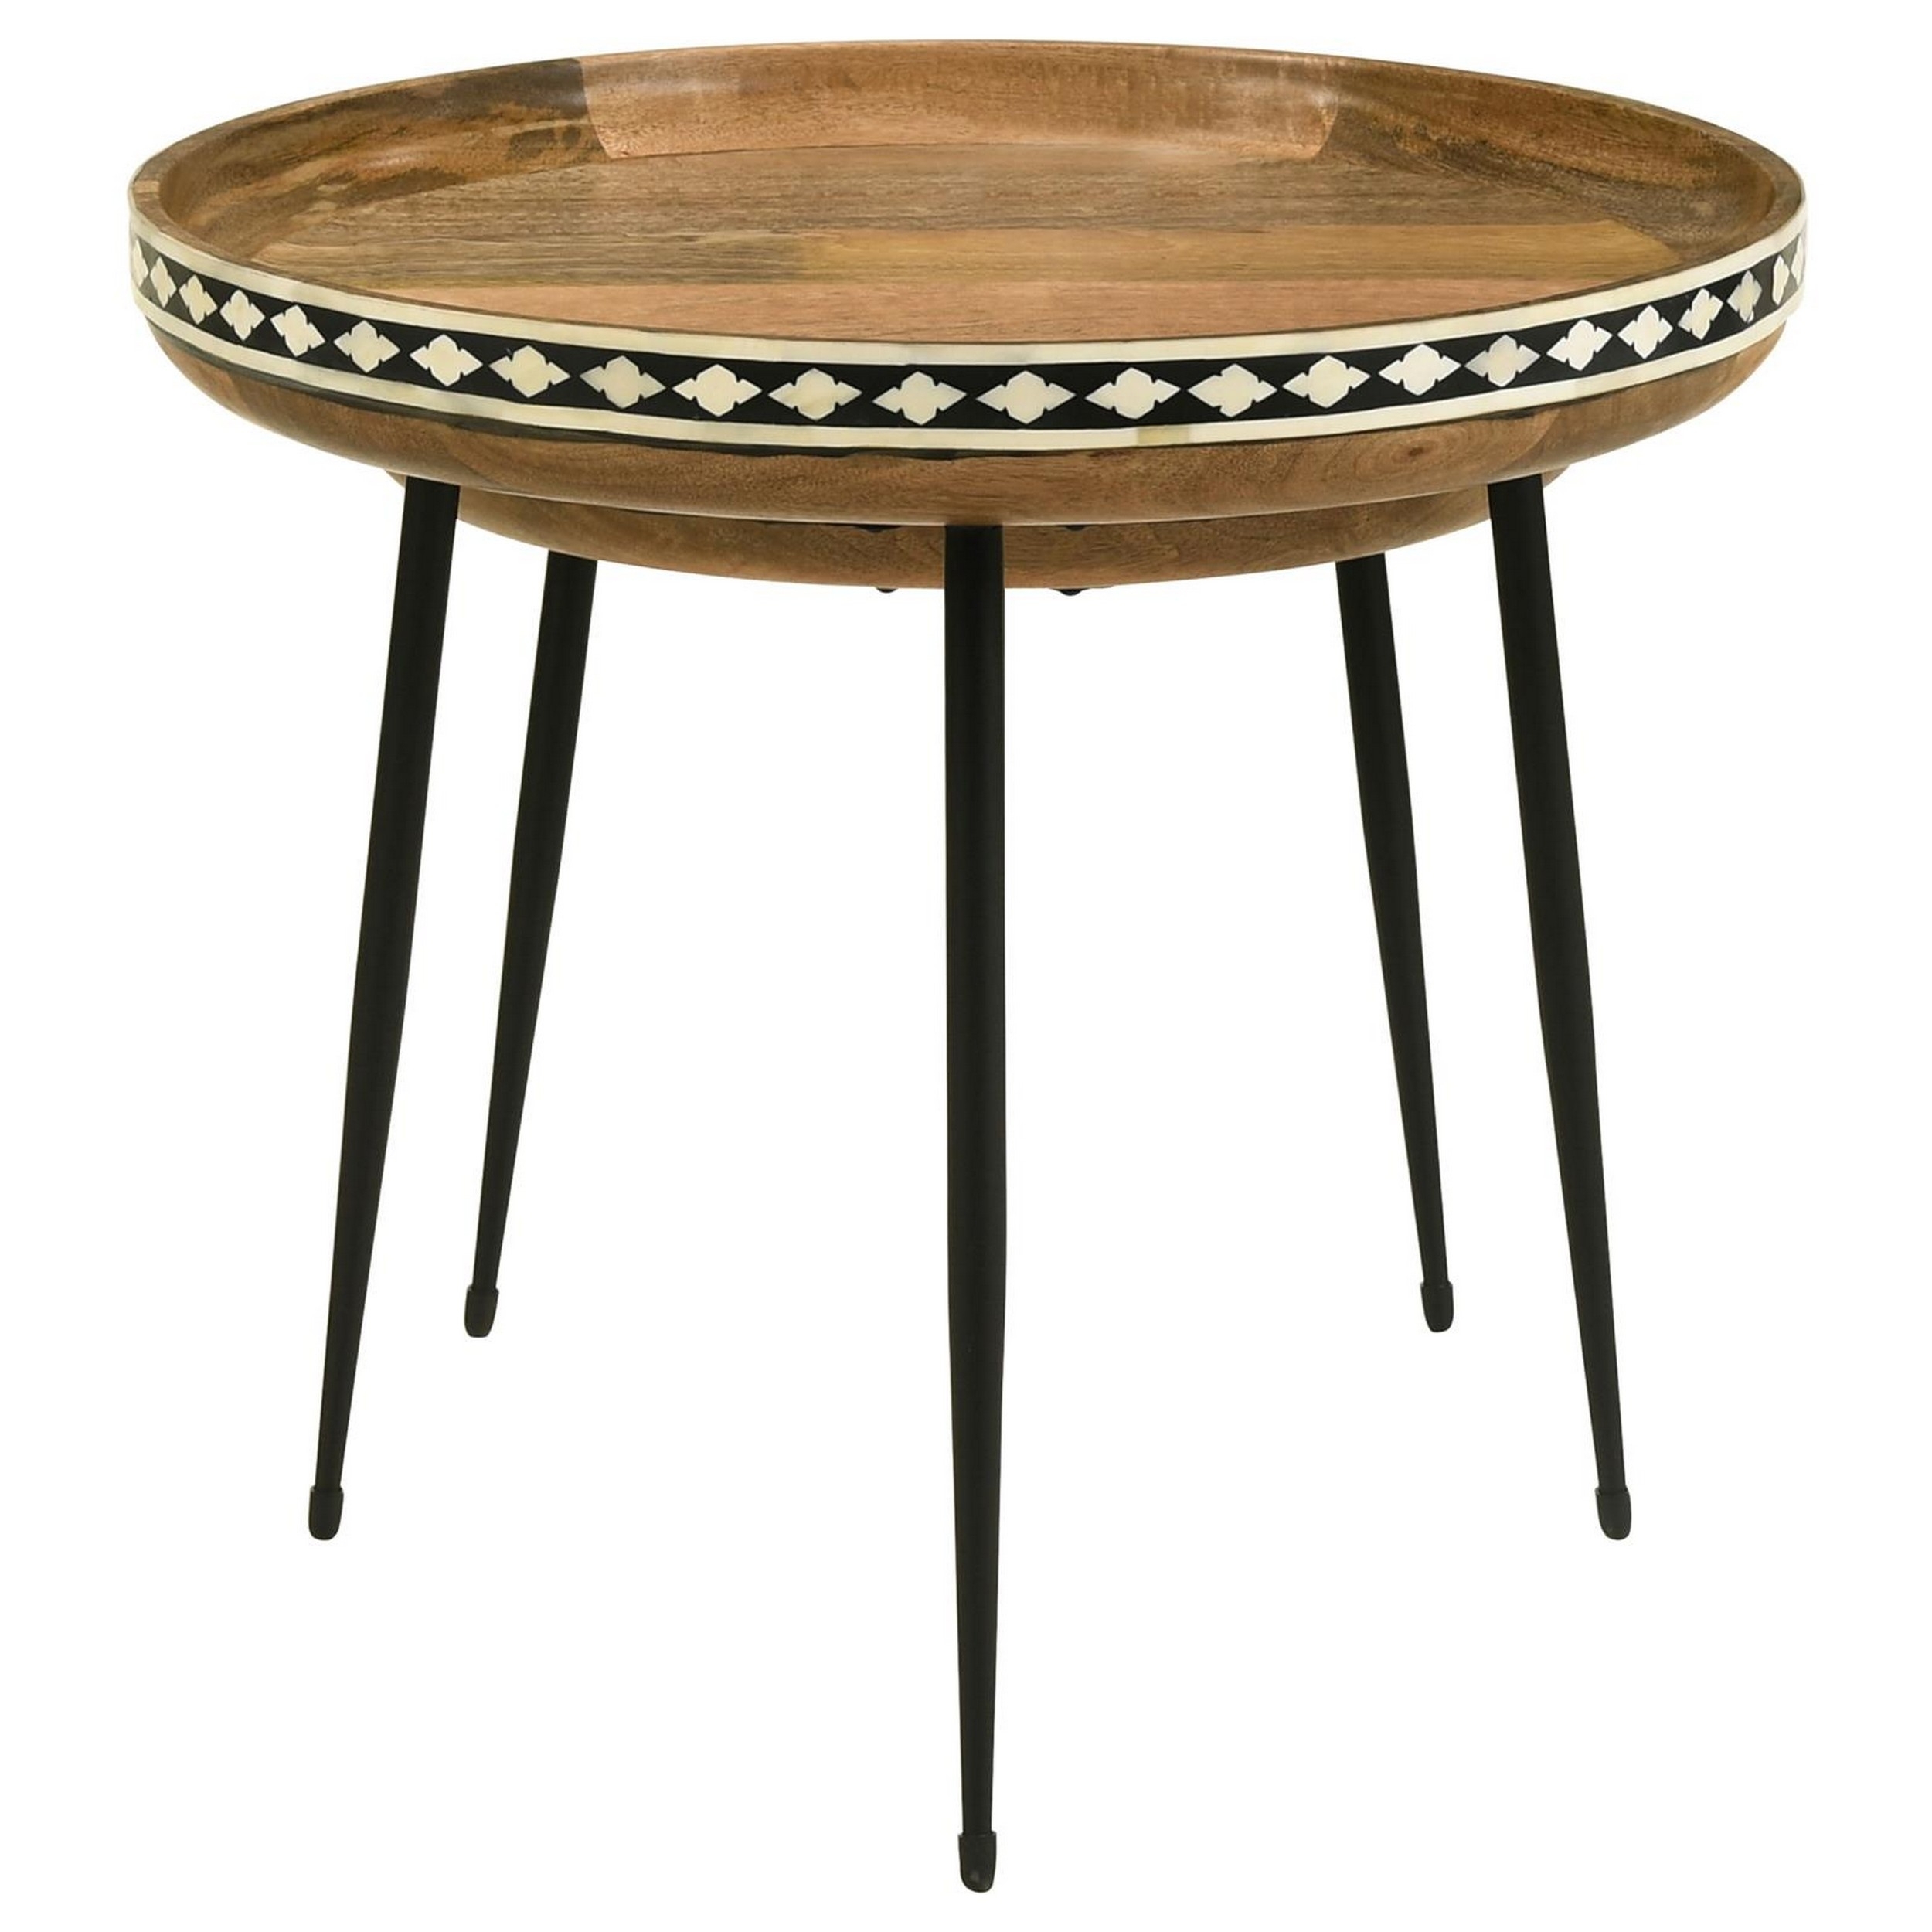 2 Piece Nesting Tables With Inlaid Bone Detail Design, Mango Wood, Brown -Saltoro Sherpi